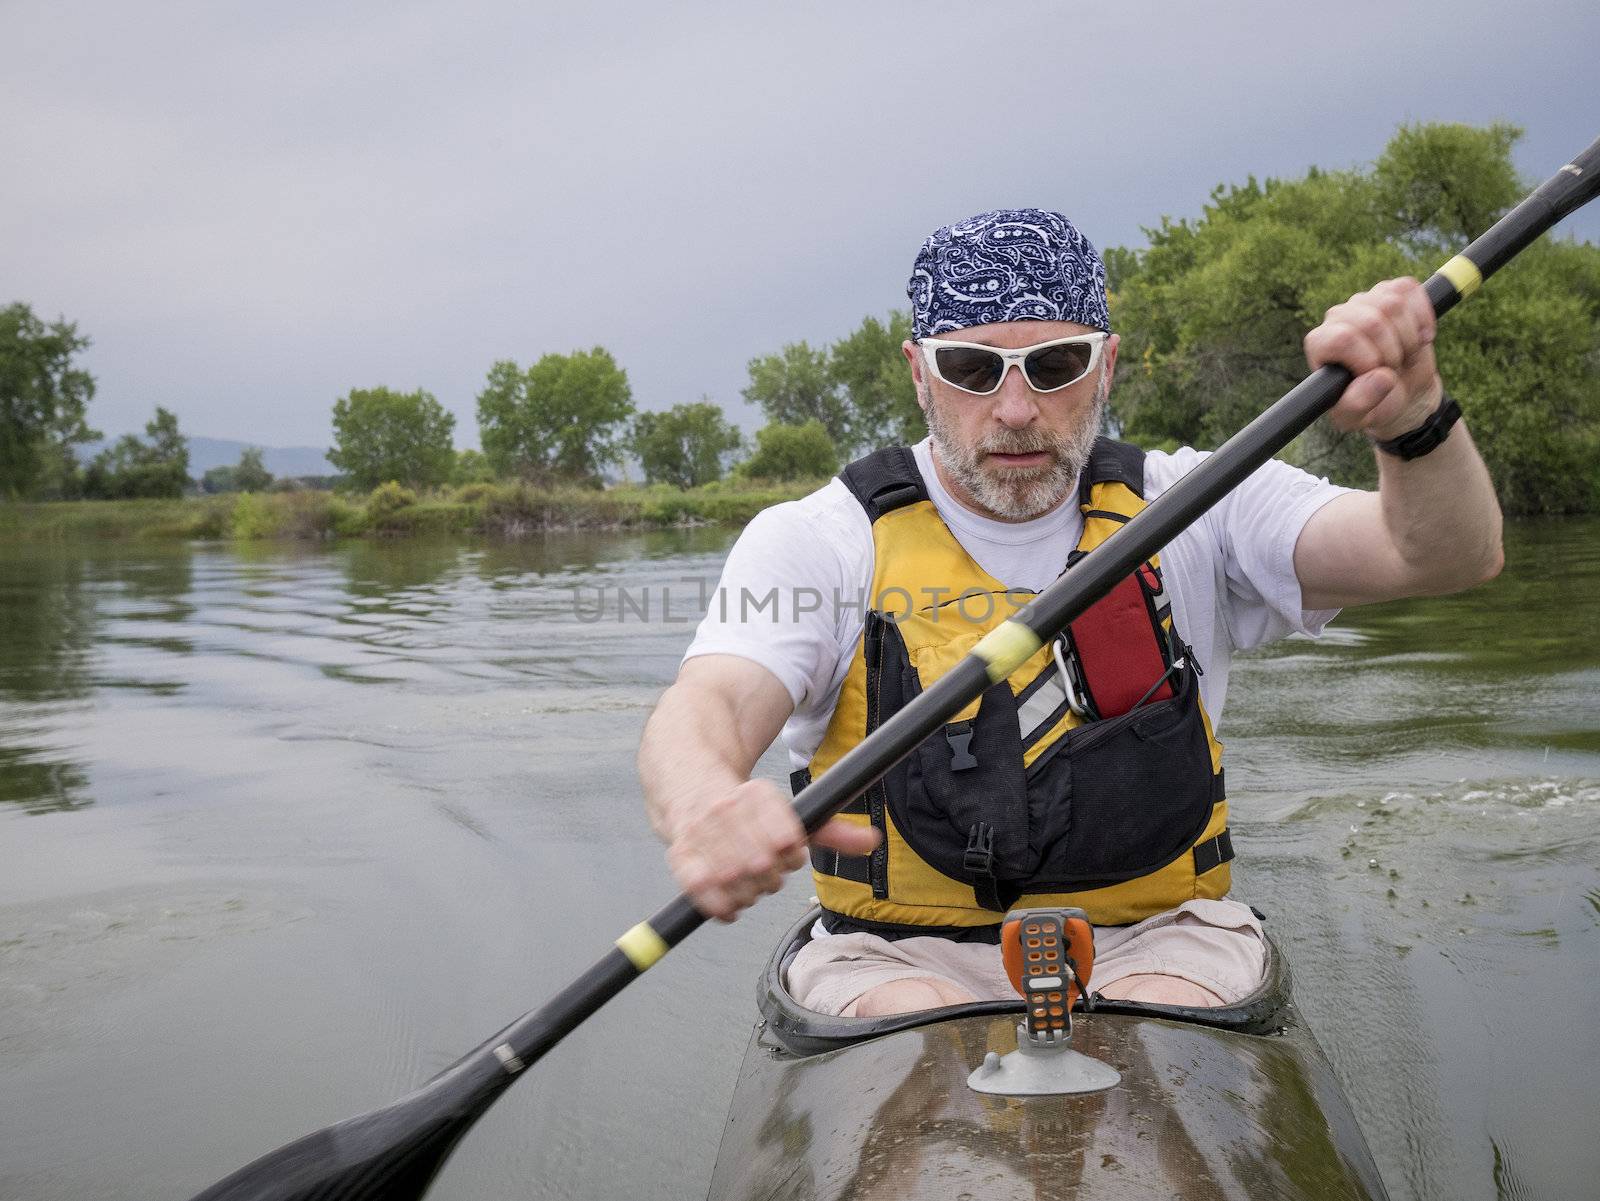 senior male paddler training in a narrow fast racing kayak on a lake, focus on paddler's face